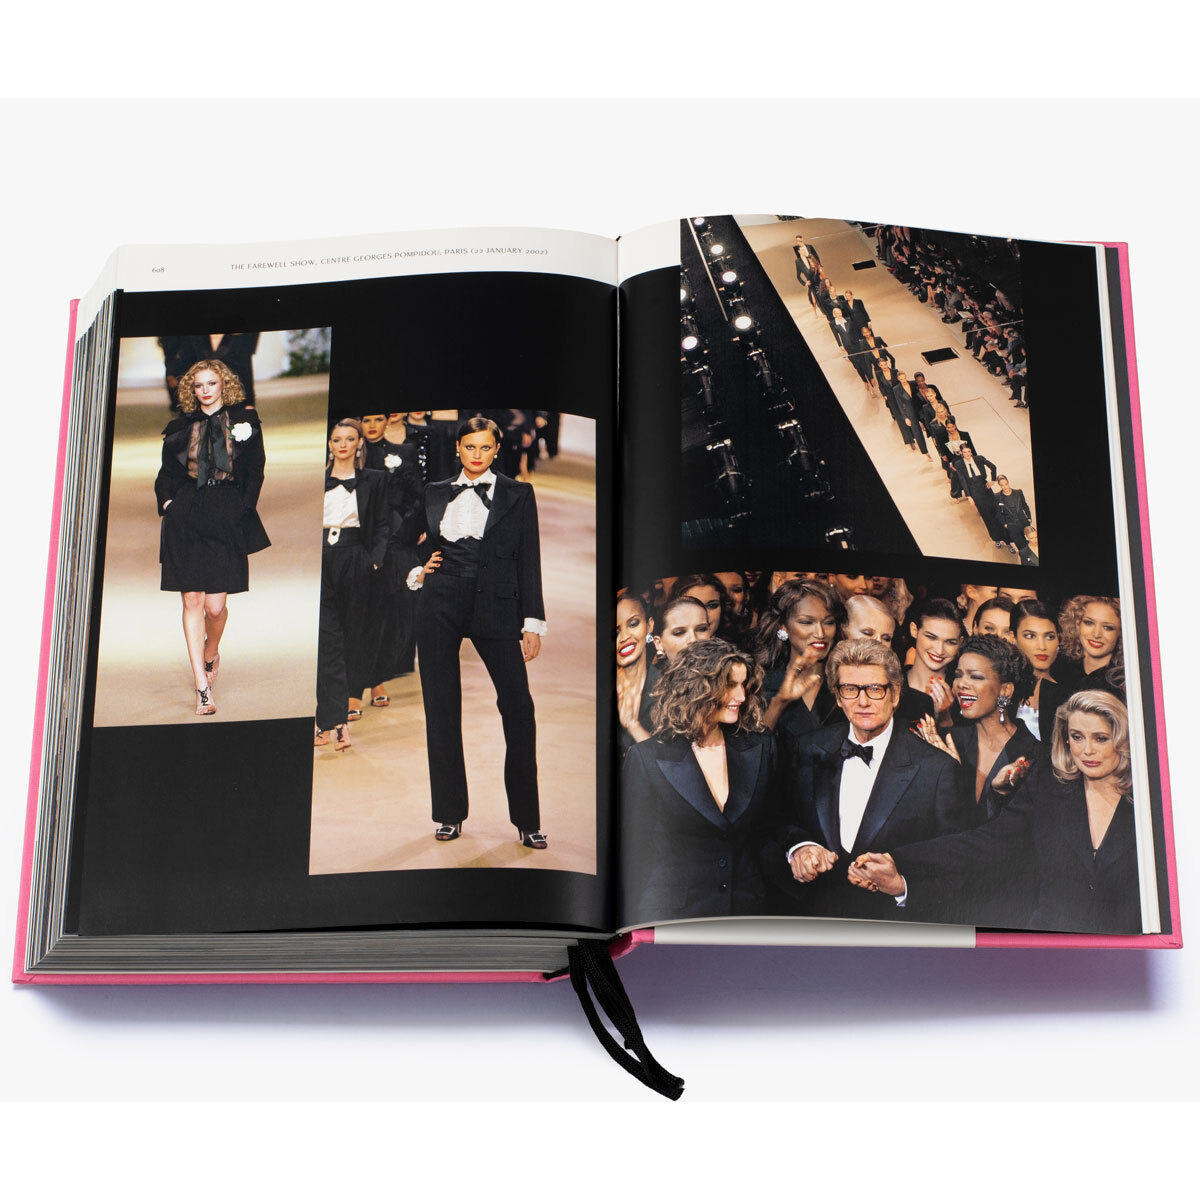 YVES SAINT LAURENT CATWALK - The Complete Haute Couture